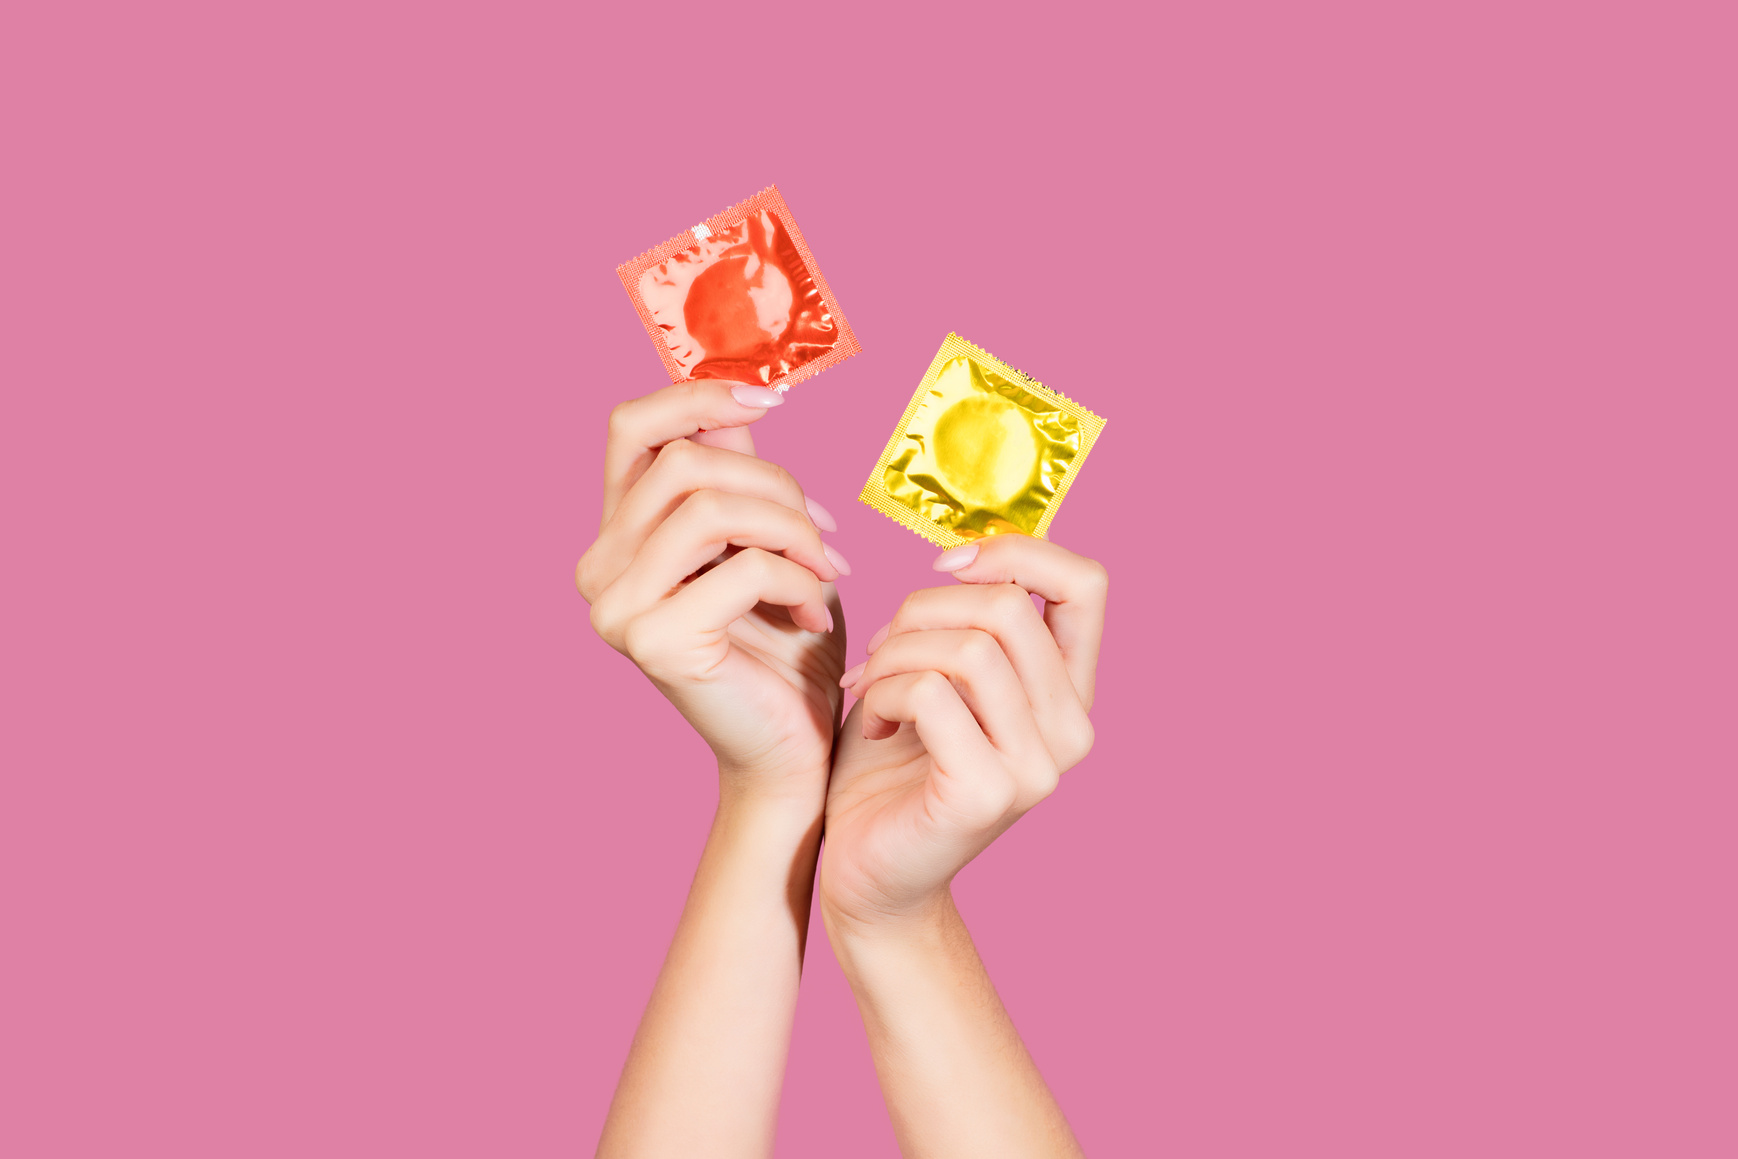 Woman holding condom